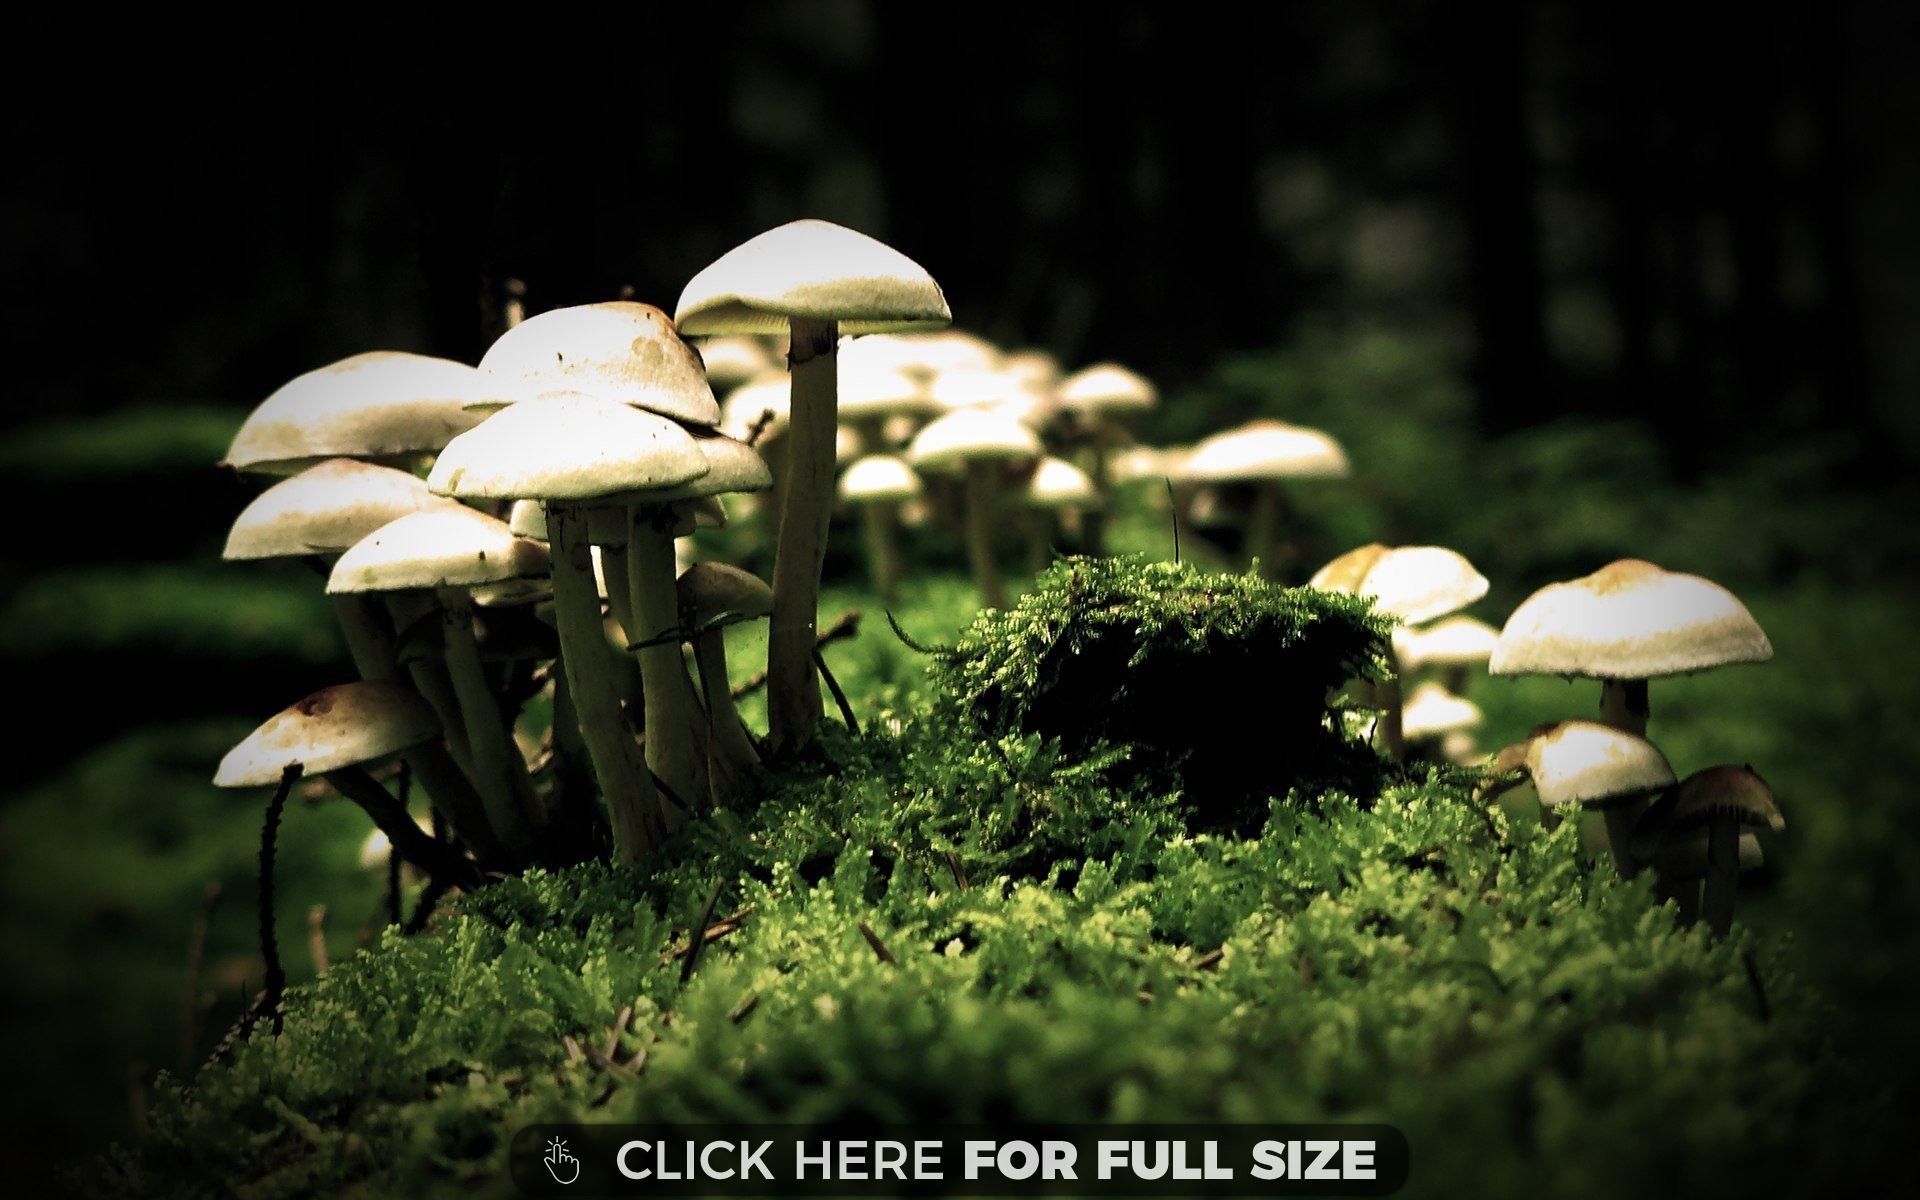 1920x1200 Mushroom Wallpaper for PC Full HD Pictures 1920Ã1200 Mushroom Wallpaper (30  Wallpapers) | Adorable Wallpapers | Desktop | Pinterest | Mushrooms,  Wallpaper ...